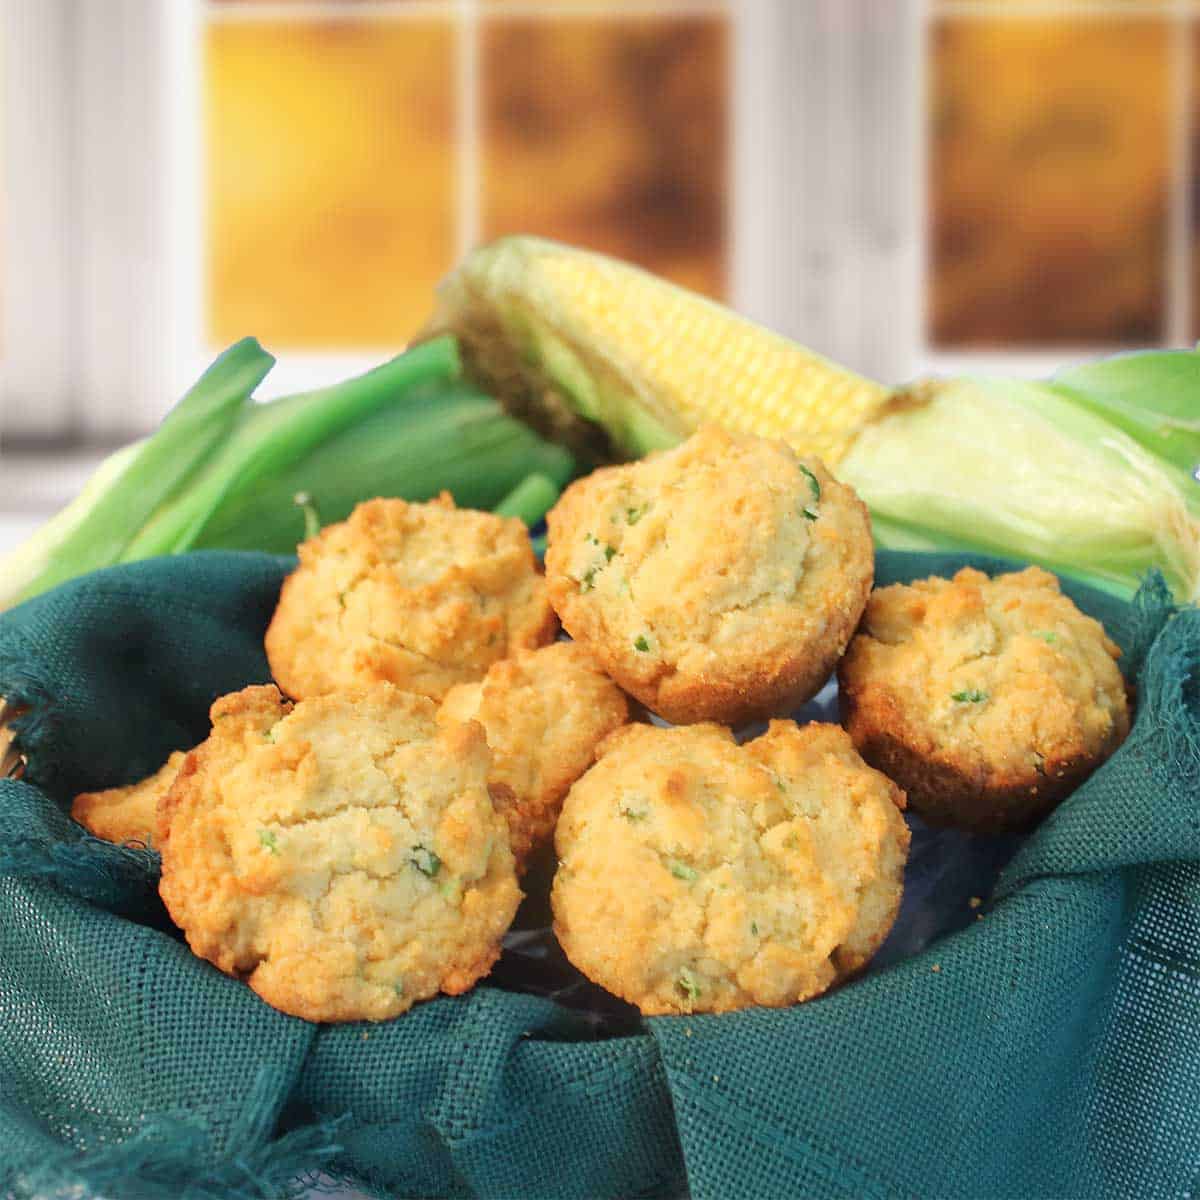 Cornbread jalapeno muffins in a basket.